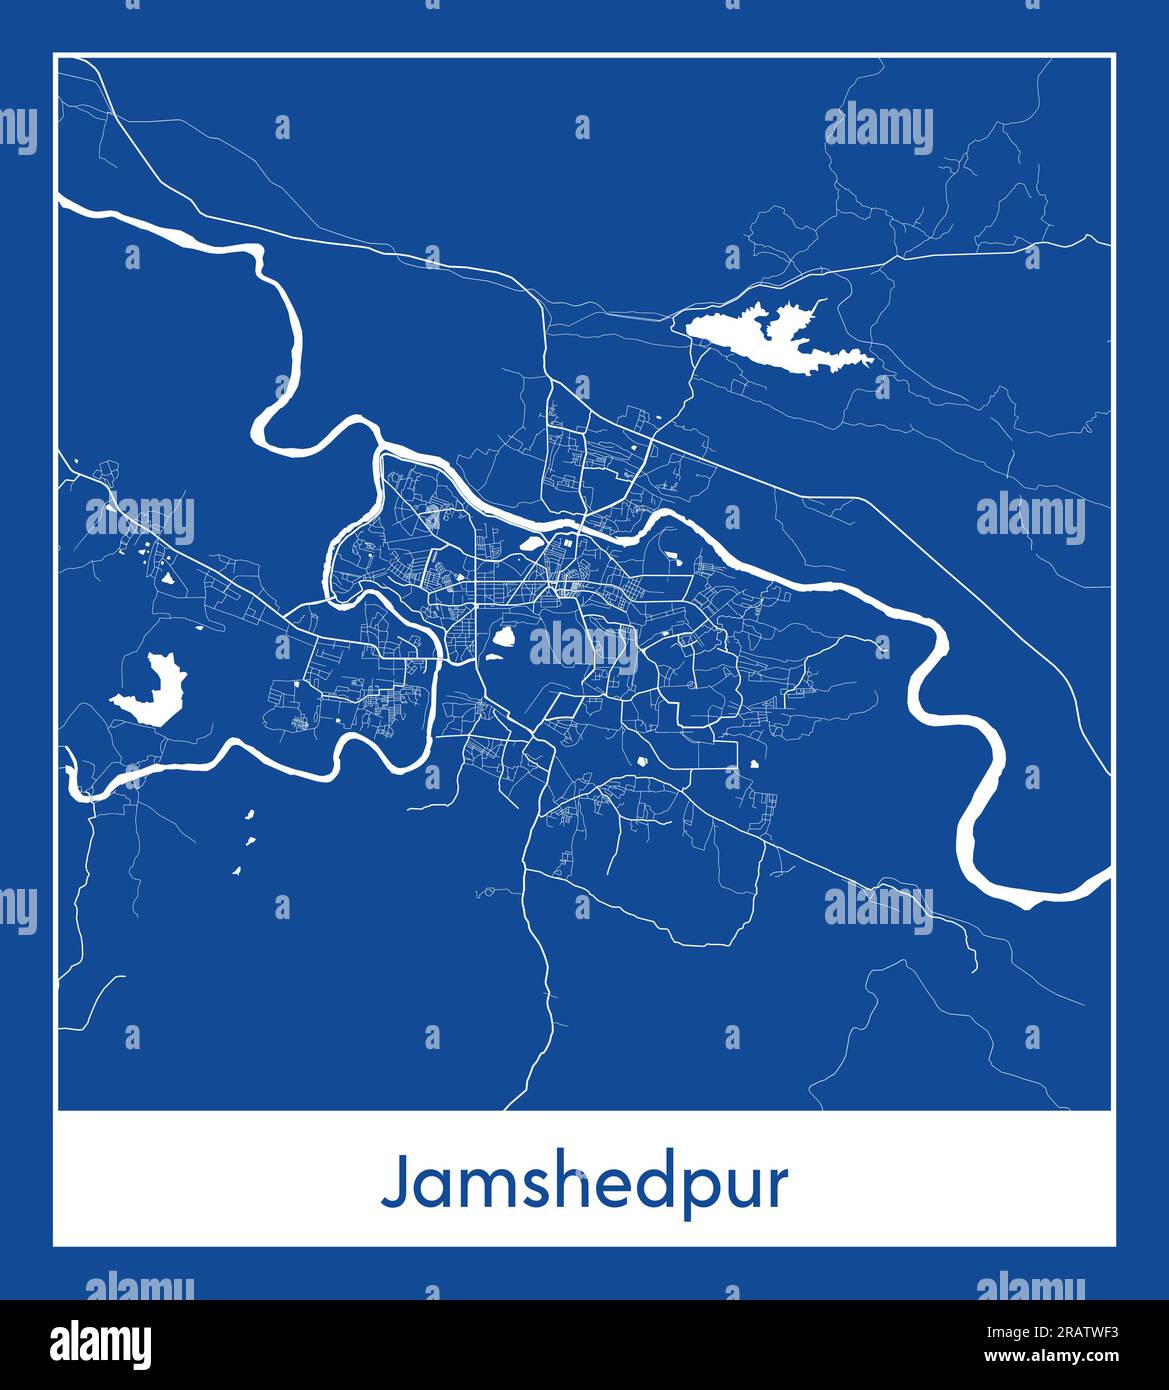 Jamshedpur India Asia City map blue print vector illustration Stock Vector